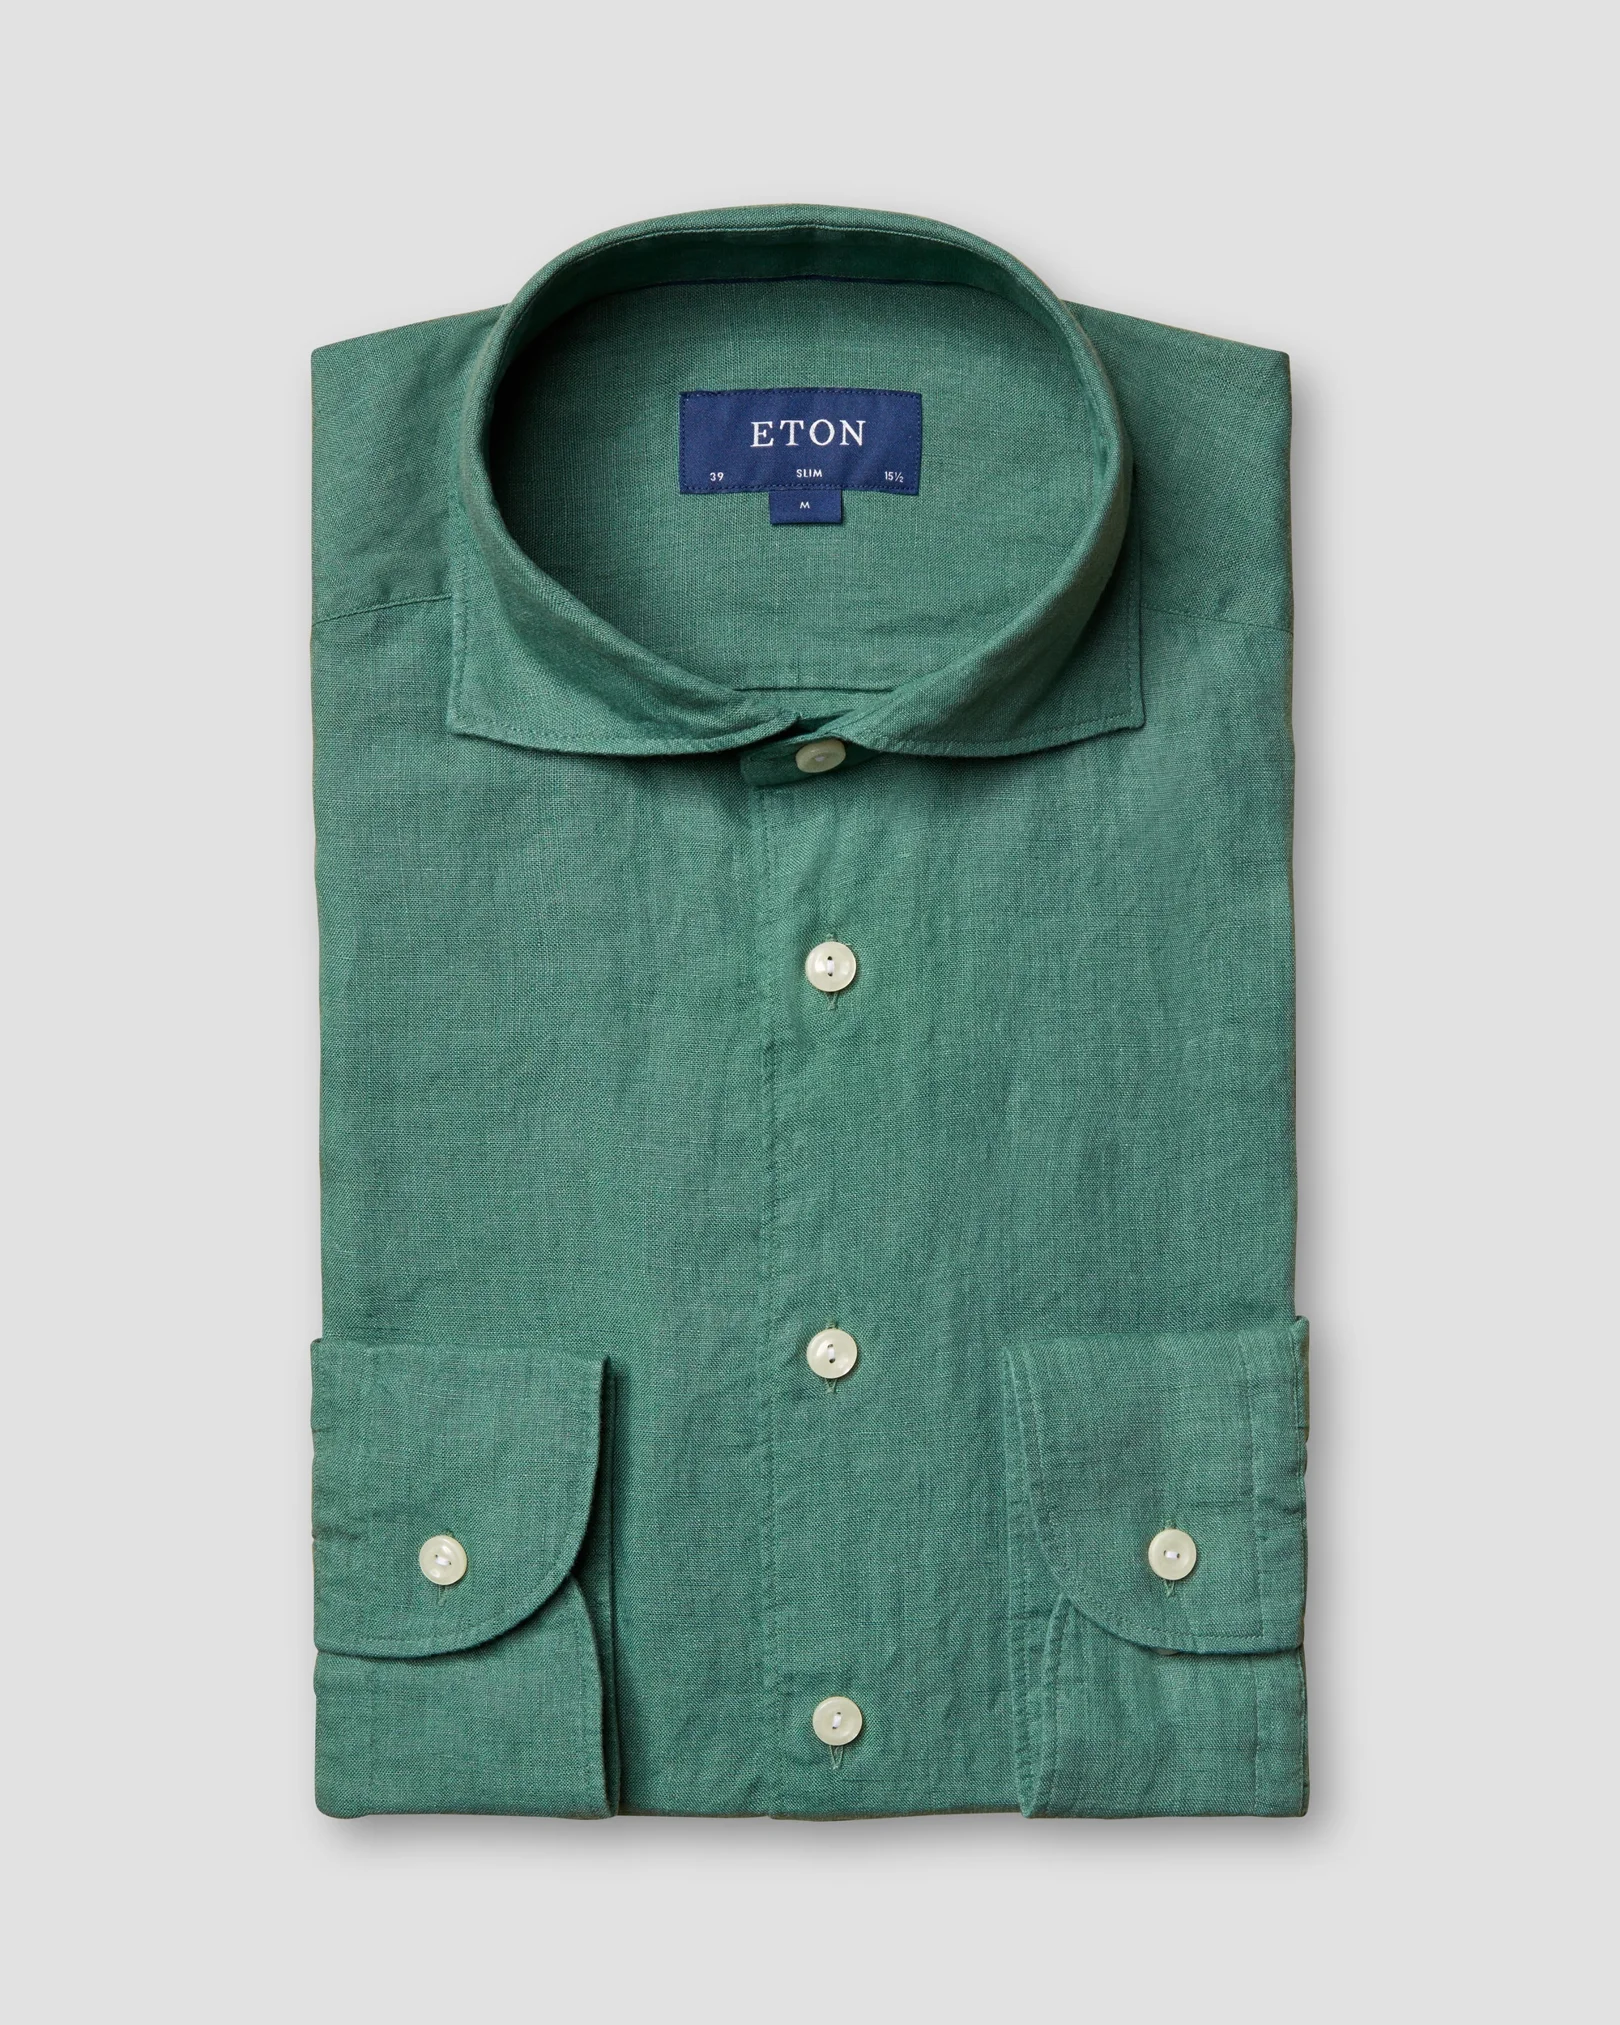 Eton - sage green linen shirt soft